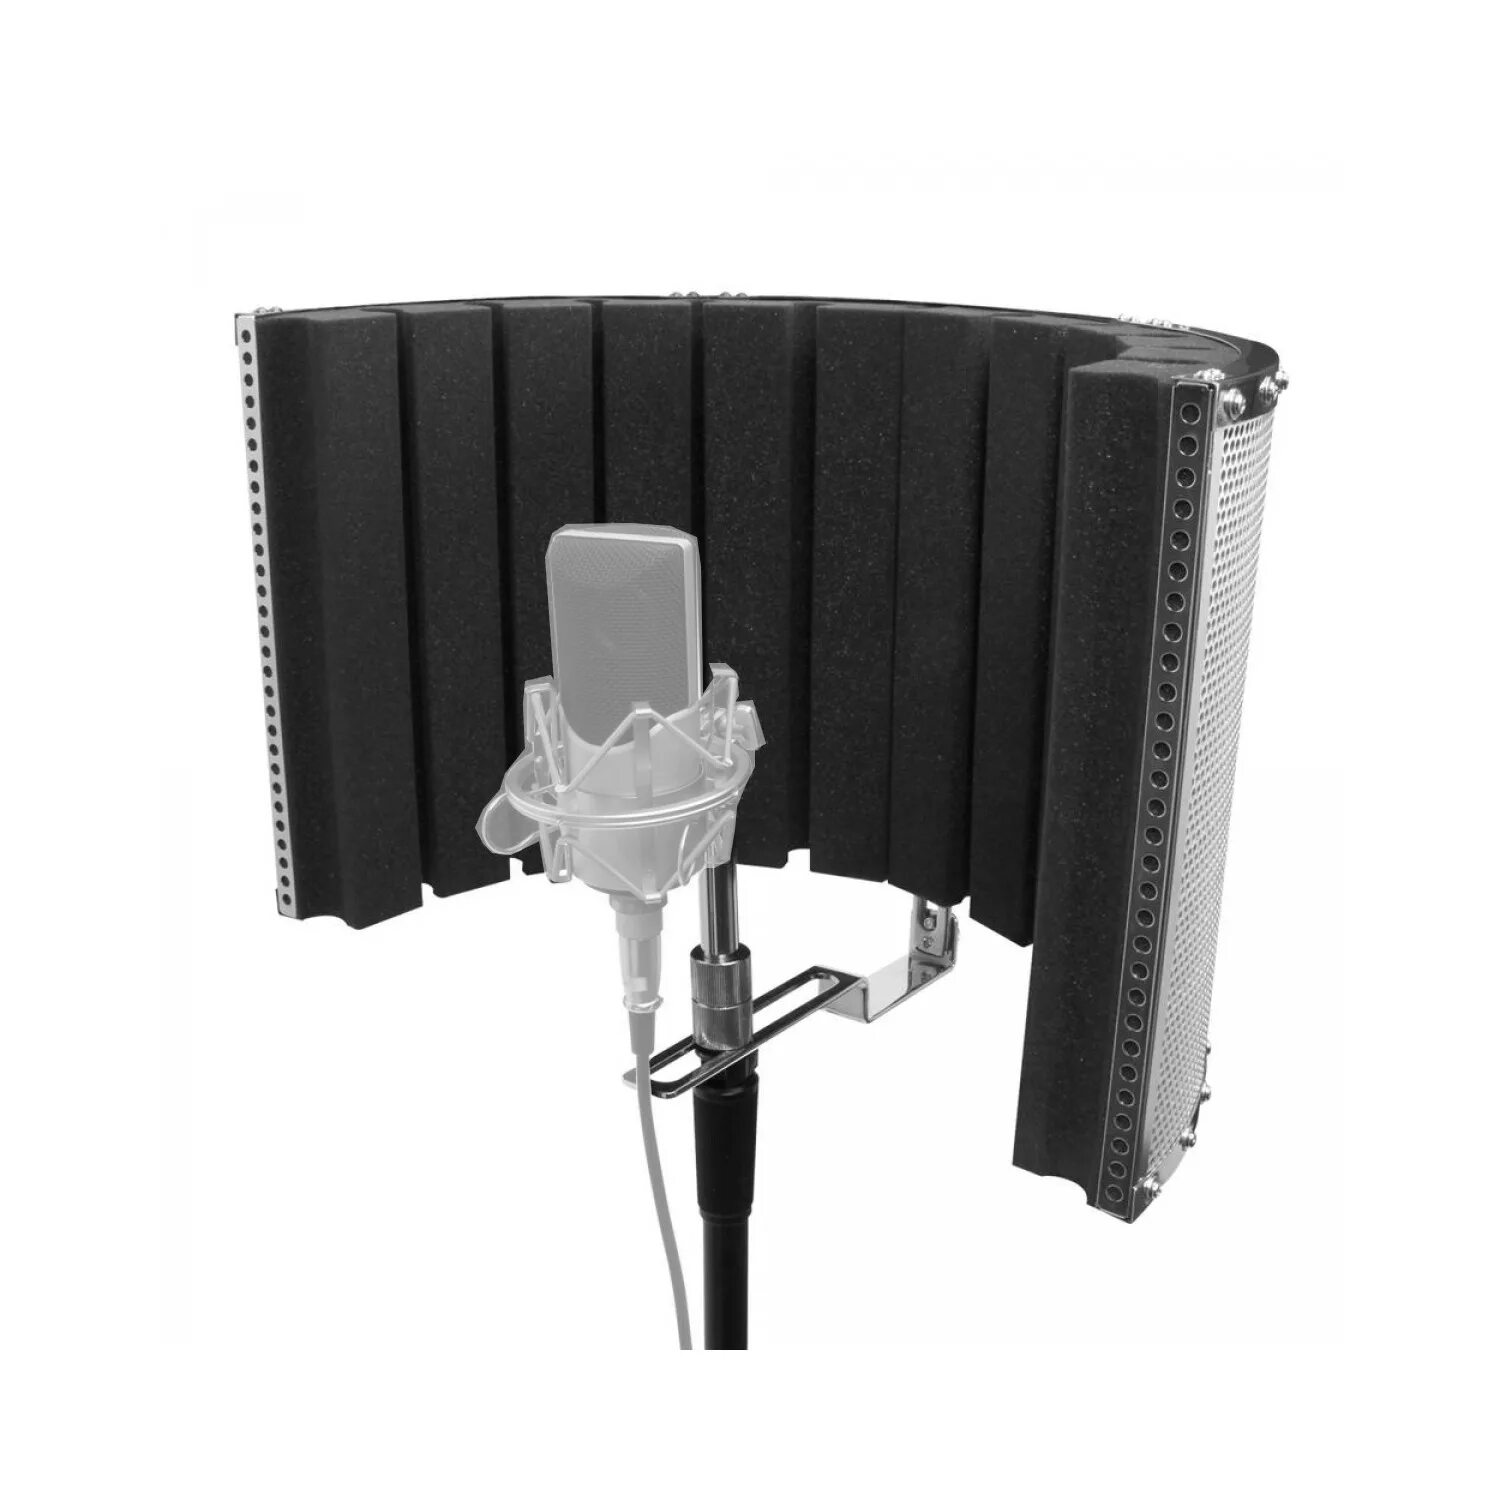 Звуковой экран. Акустический экран MAONO au-s03. Invotone pms200 акустический экран для студийных микрофонов. Lux Sound ma305. Alctron pf66.